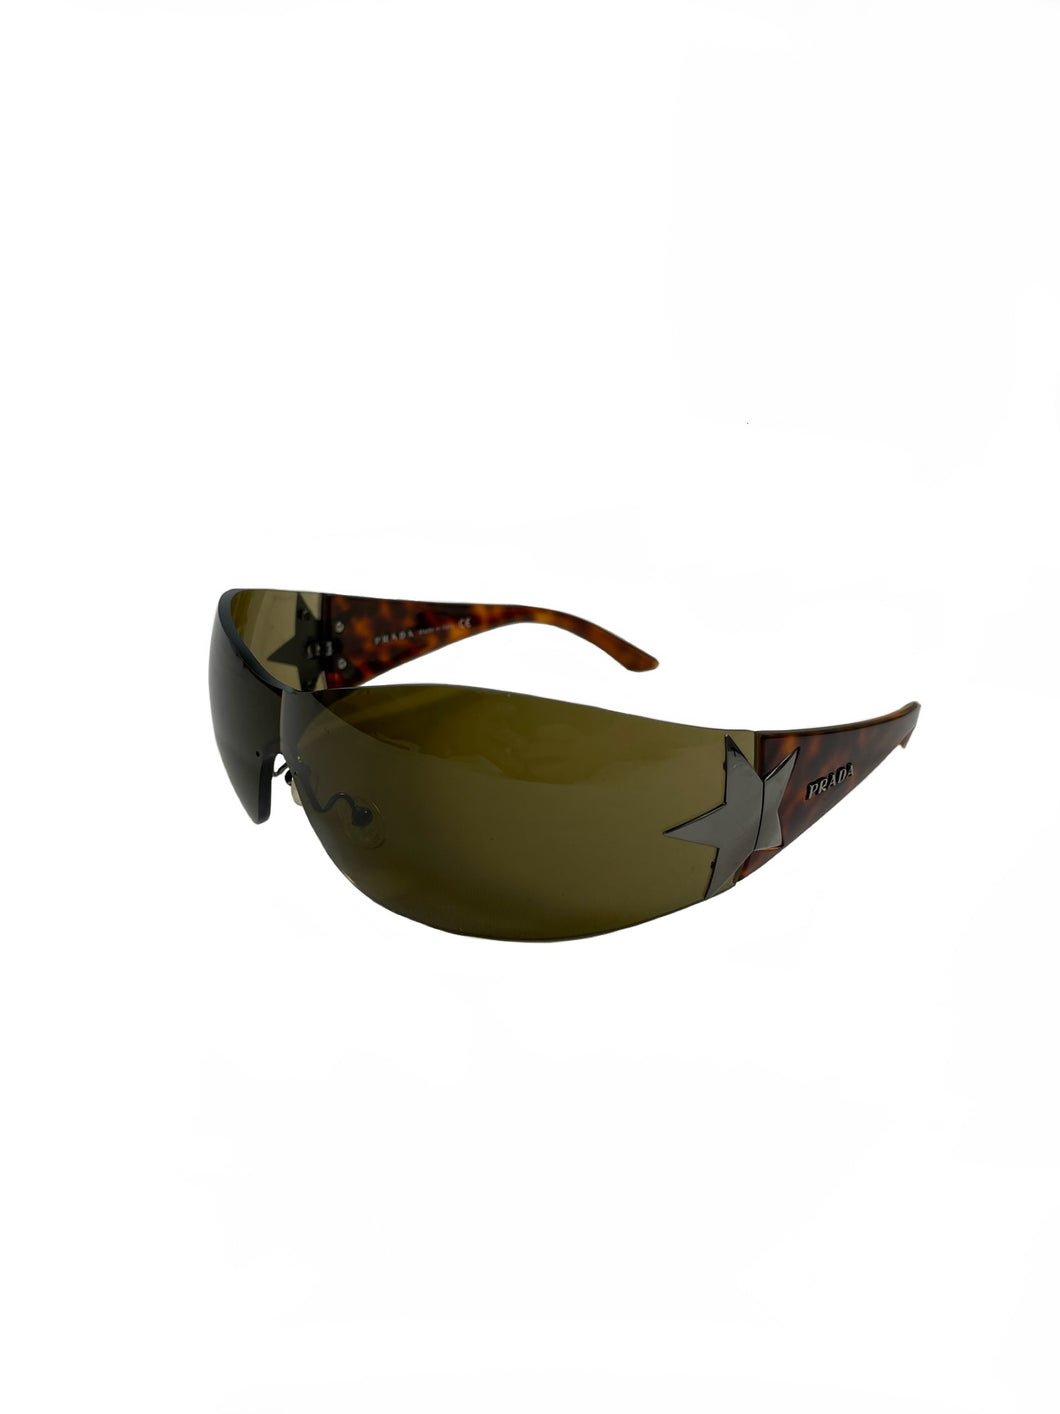 2000’s Prada shield star sunglasses